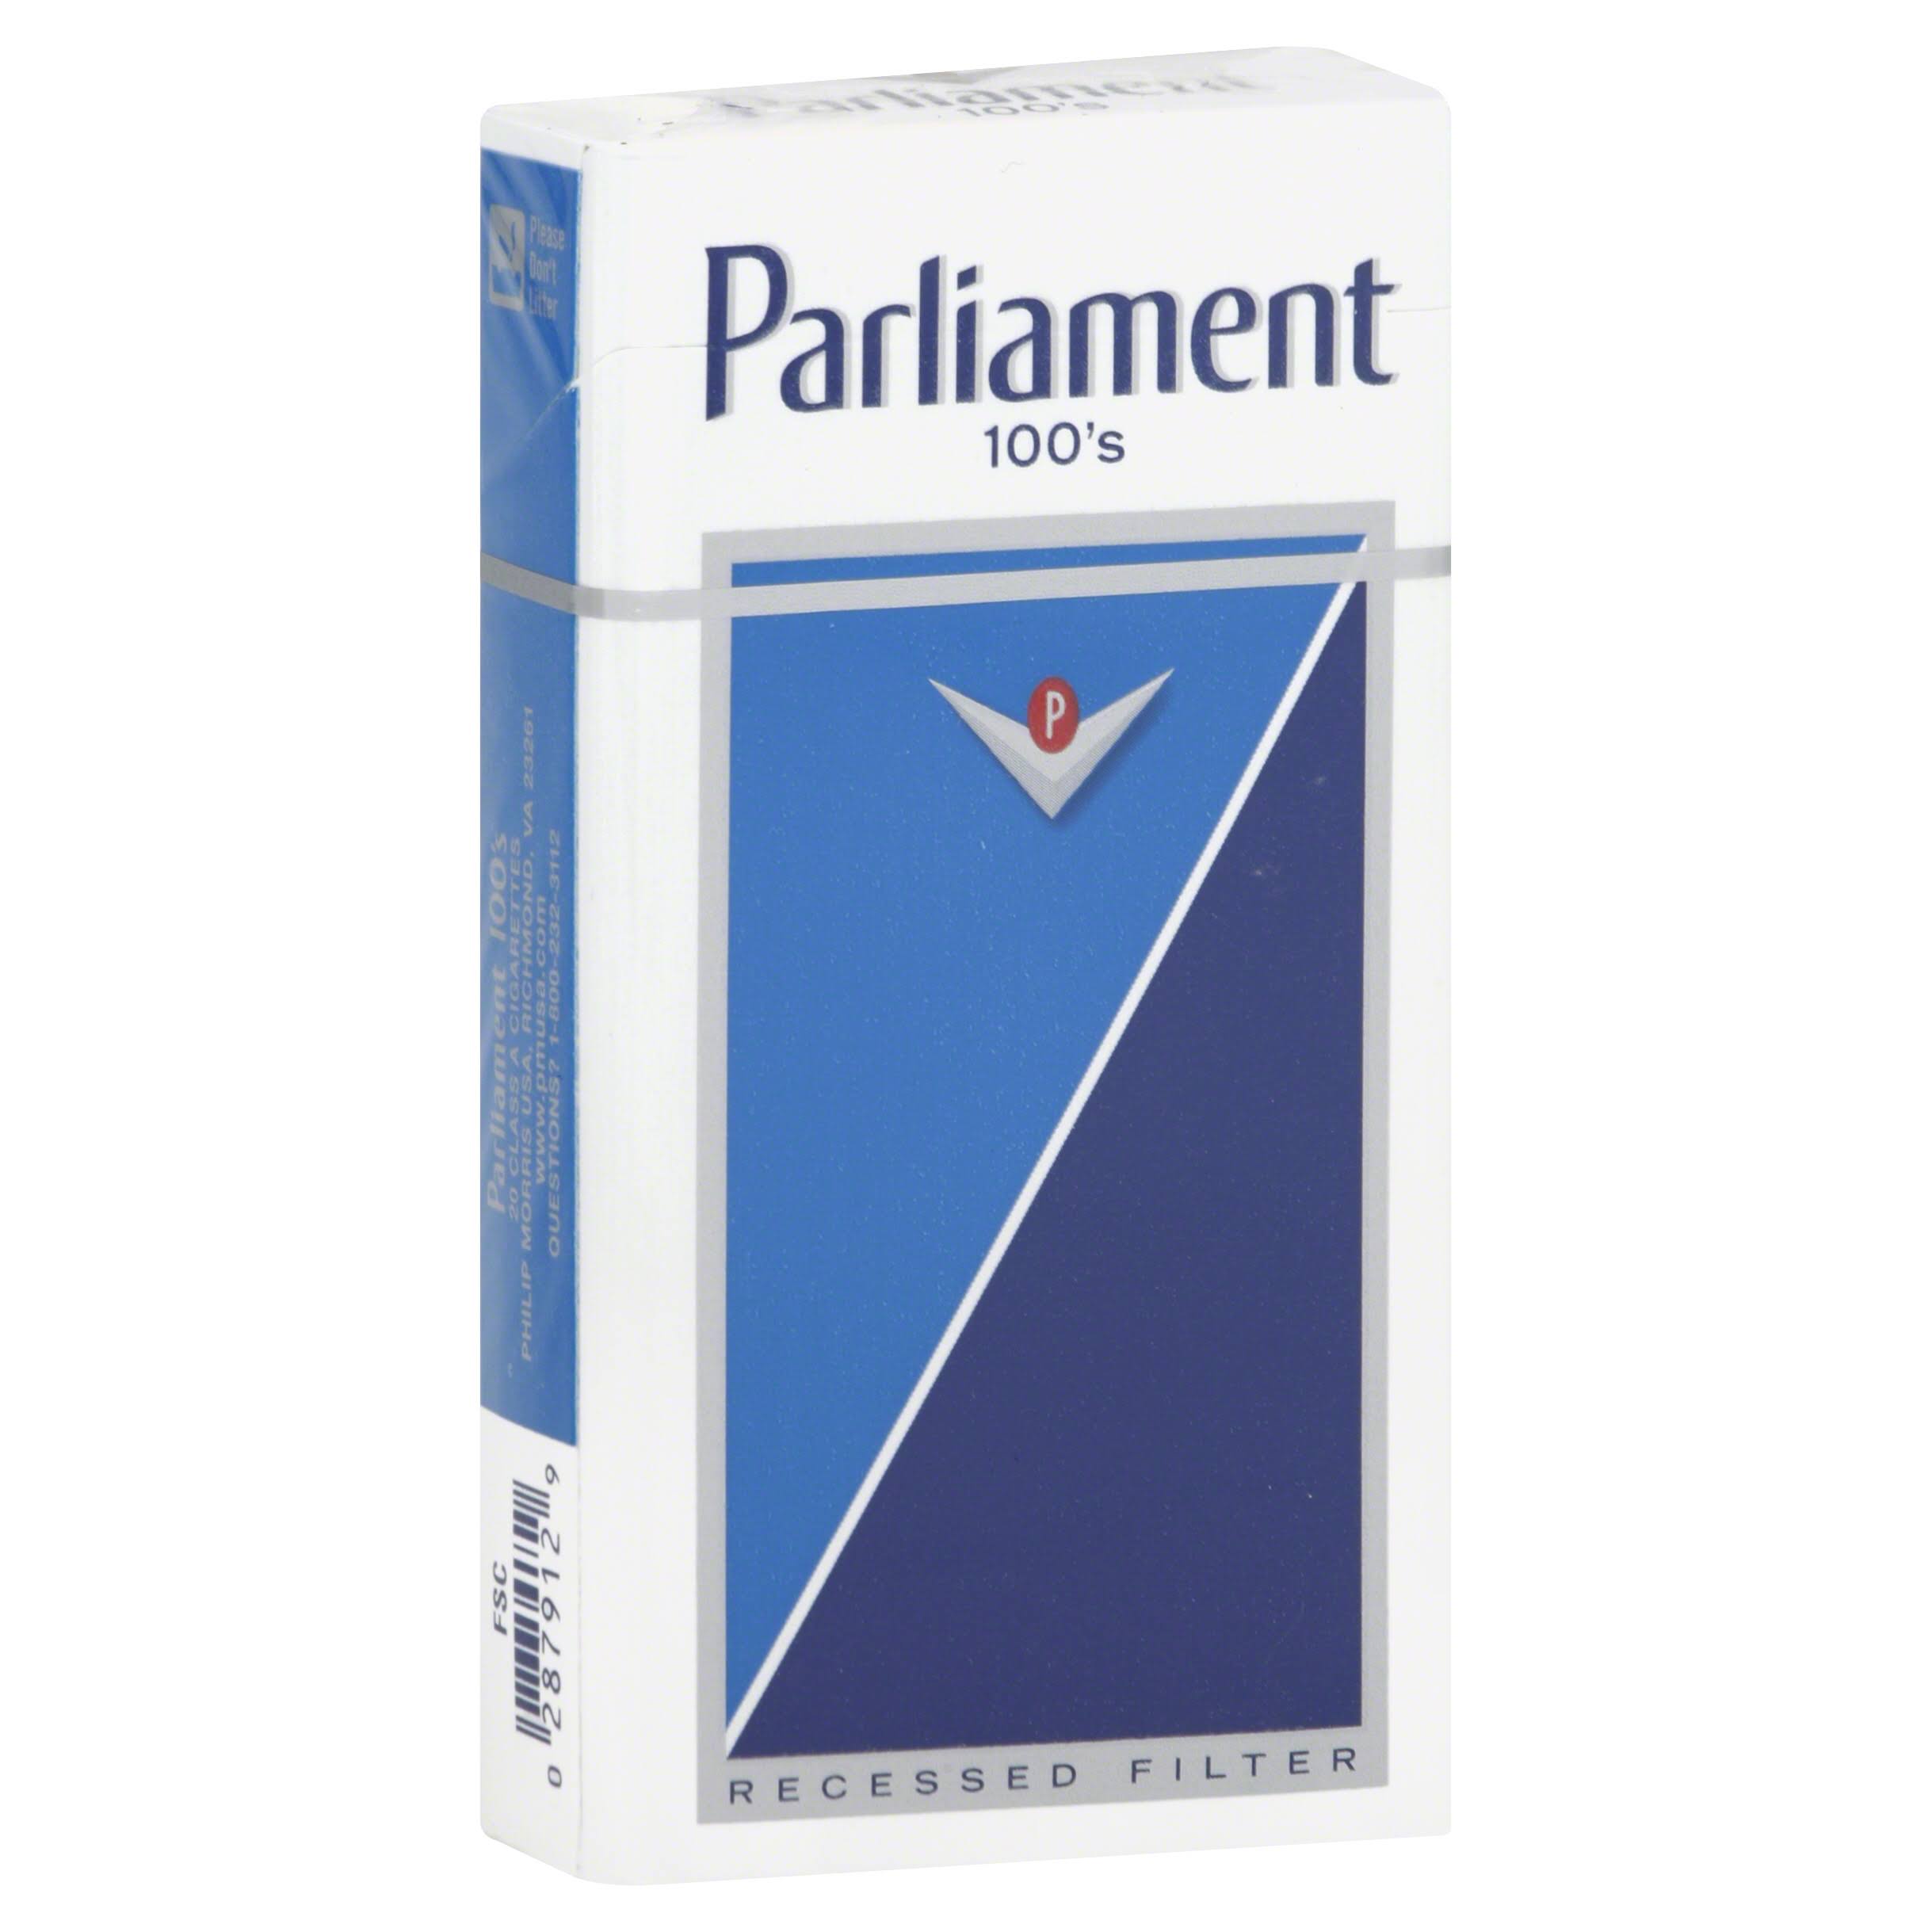 Parliament Cigarettes, Recessed Filter, 100's